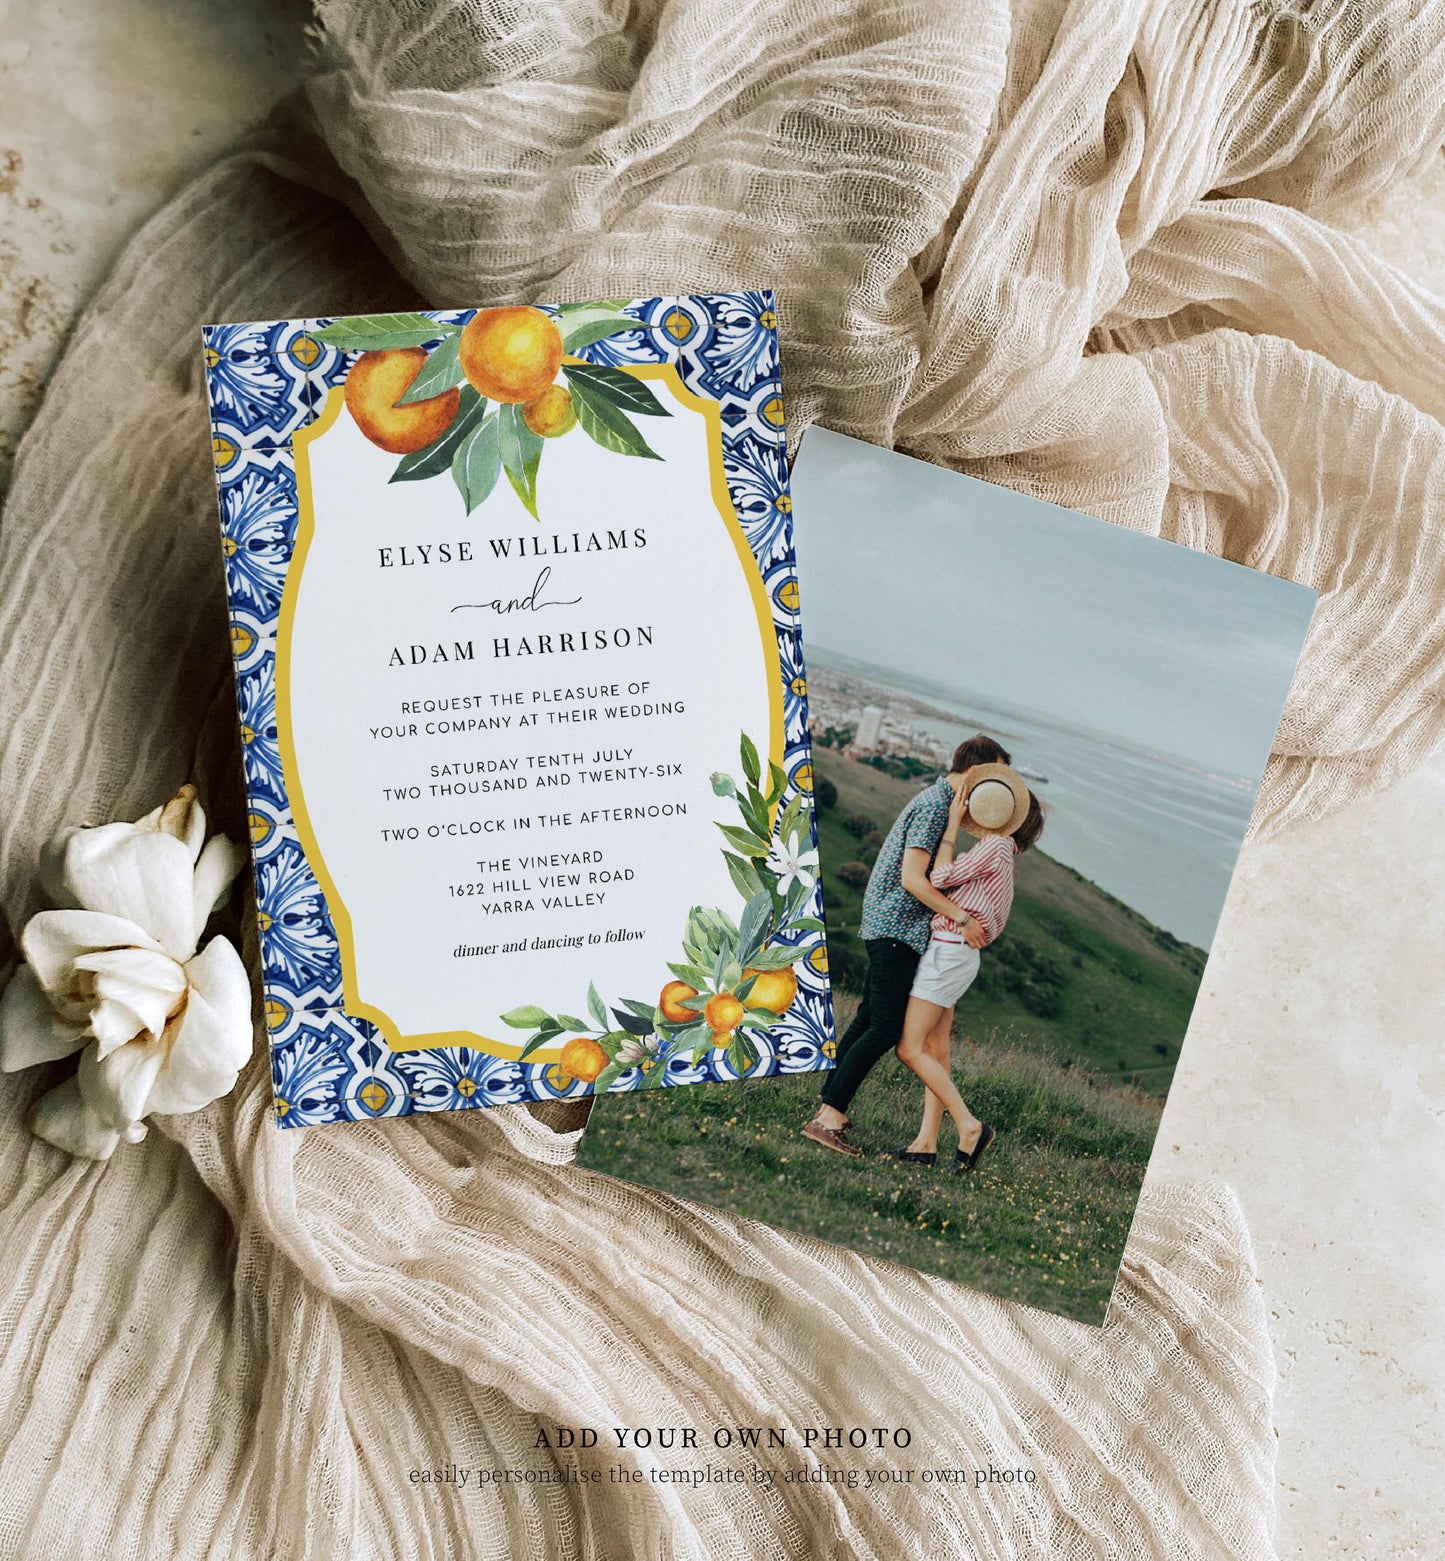 Positano Oranges | Printable Wedding Invitation Suite Template